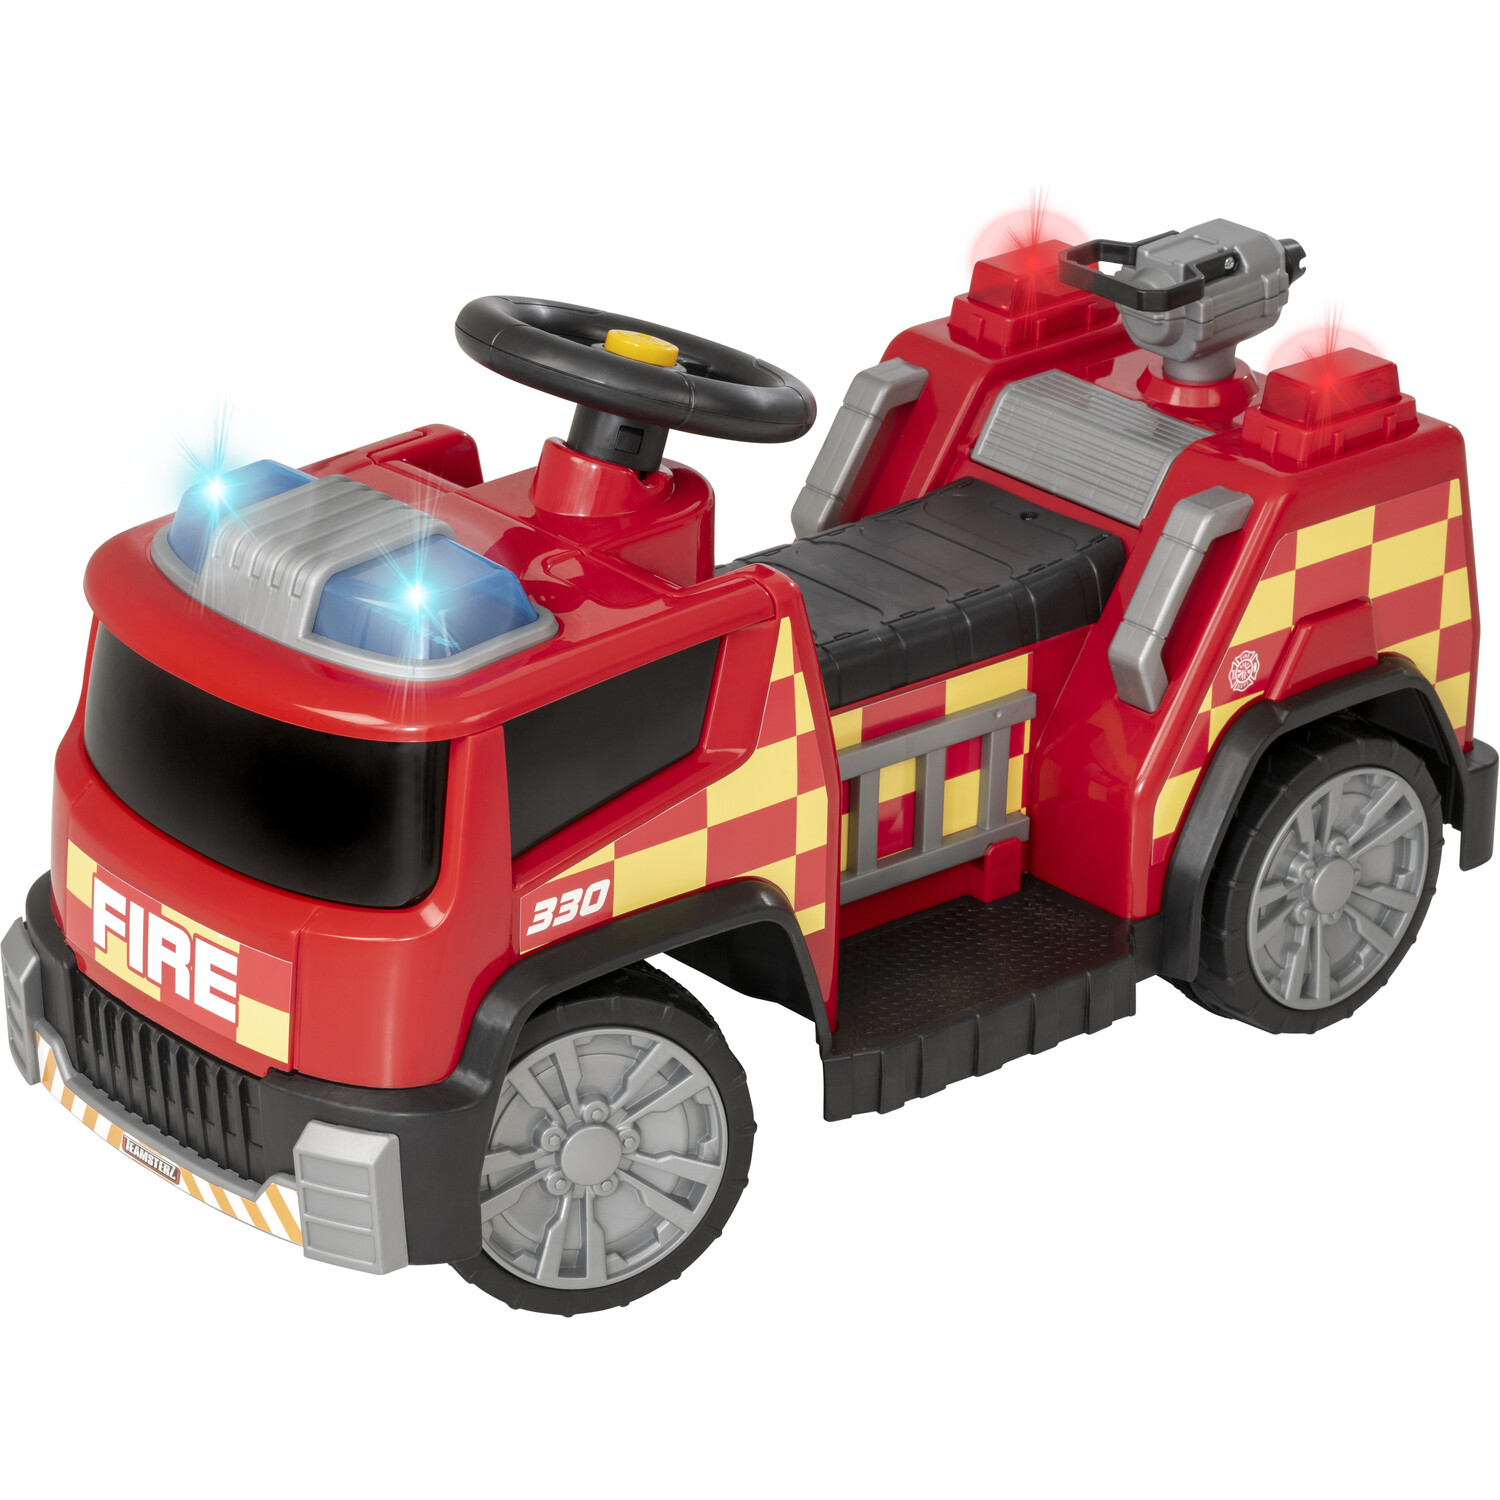 EVO Fire Engine - Red Image 1